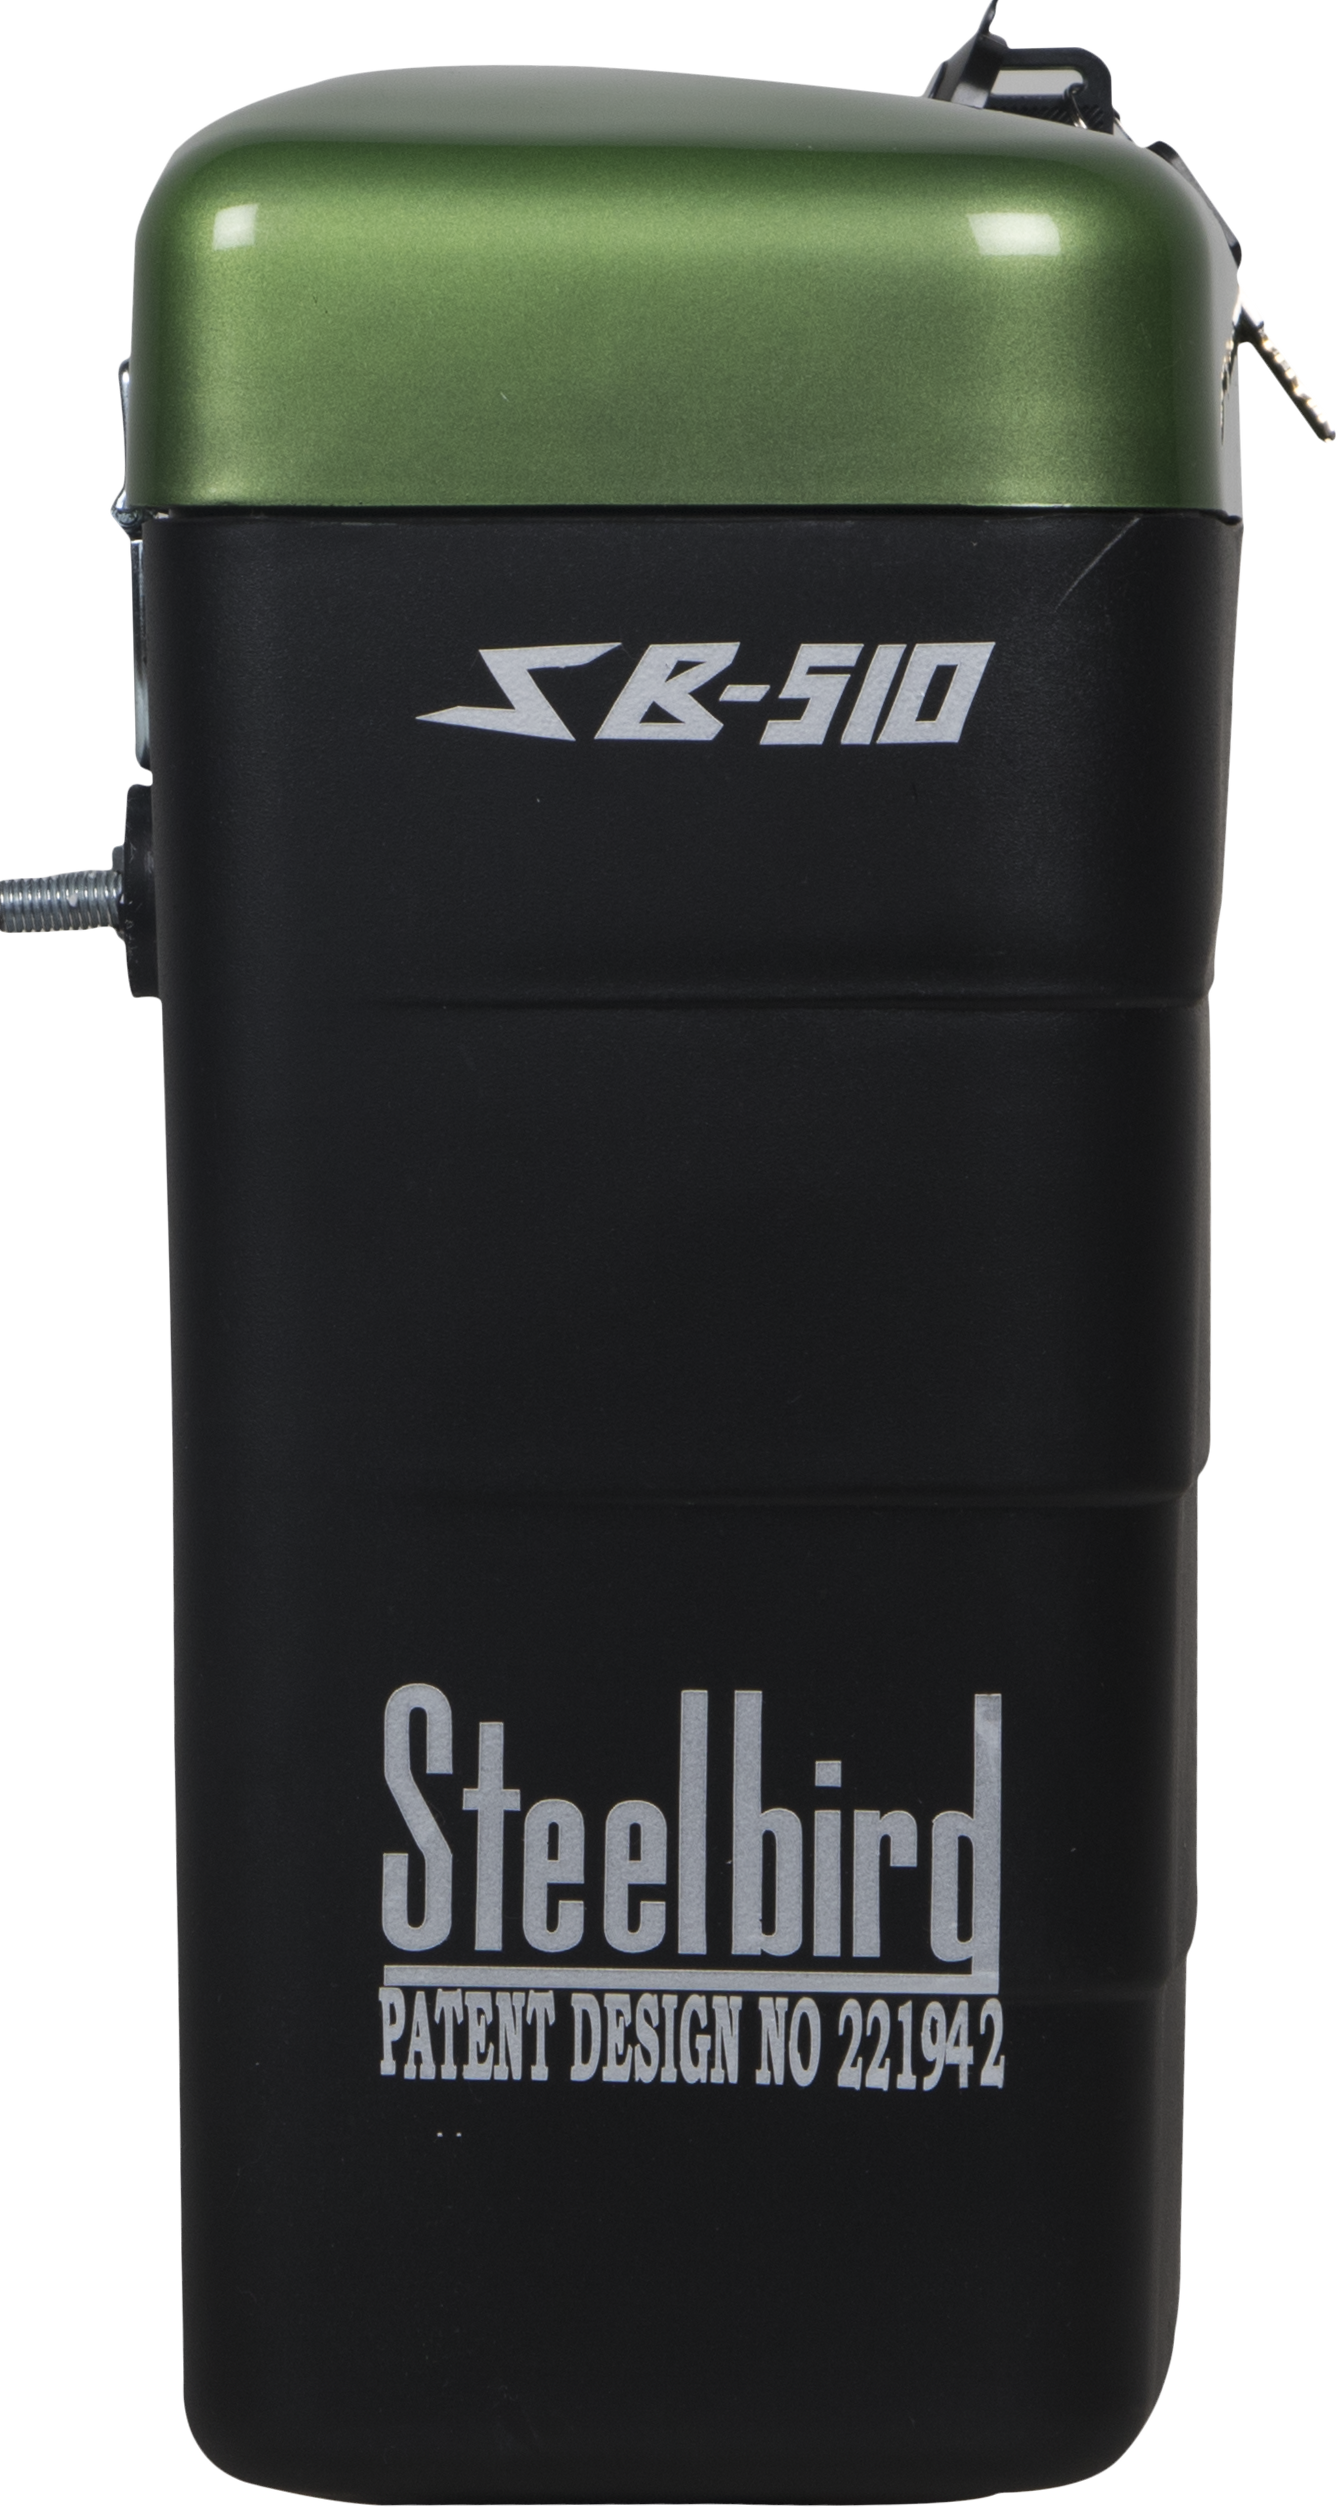 Steelbird Pannier Box SB-510 Green